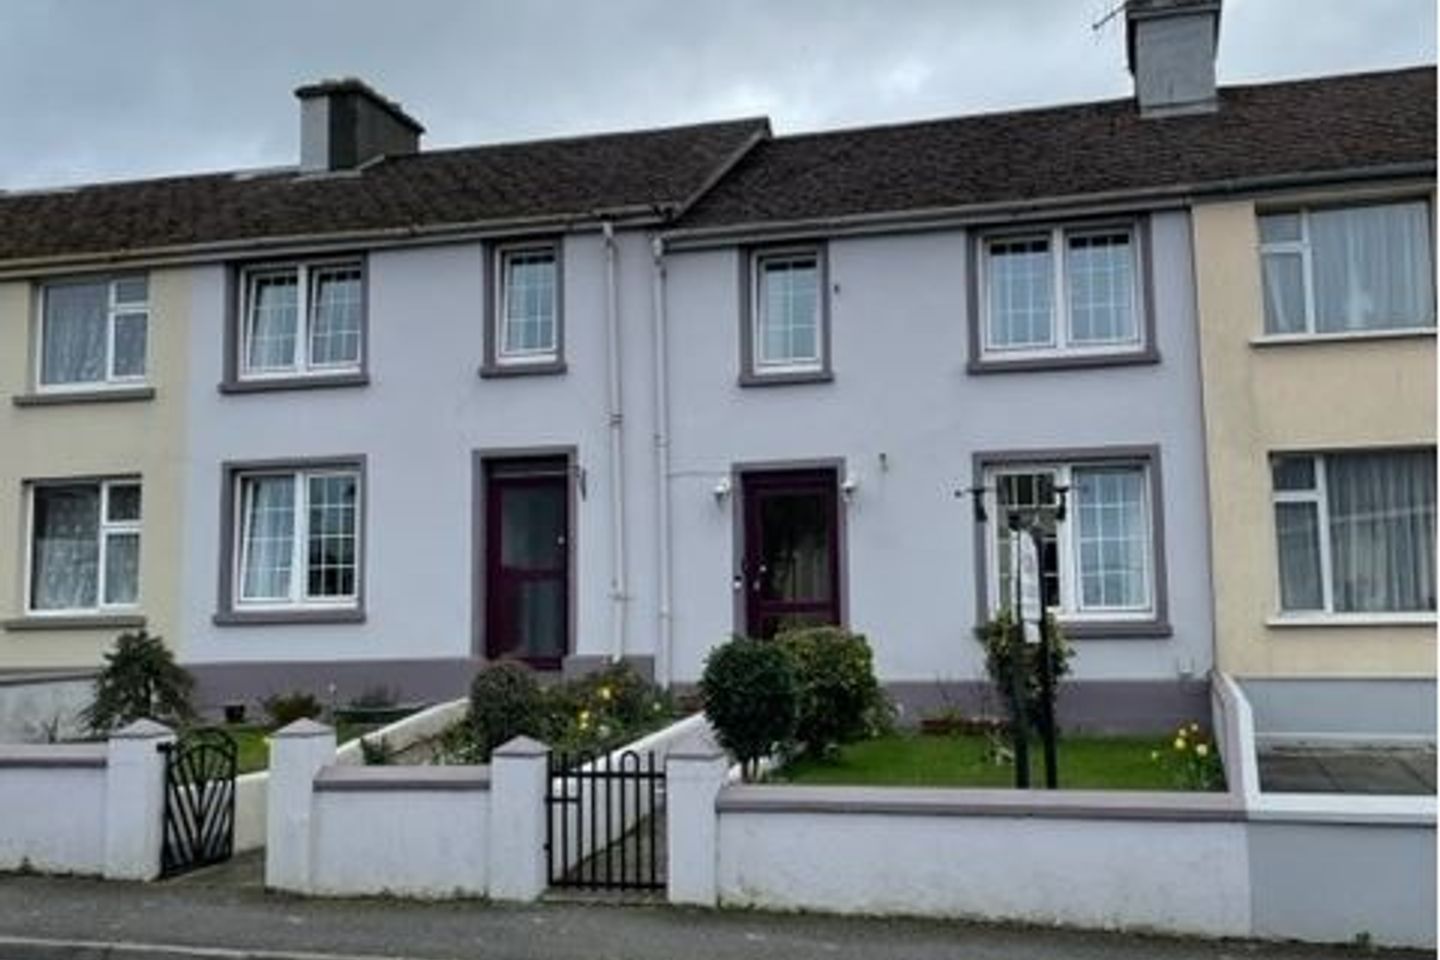 10/11 Fitzgerald's Terrace, Saint Anne's Road, Killarney, Co. Kerry